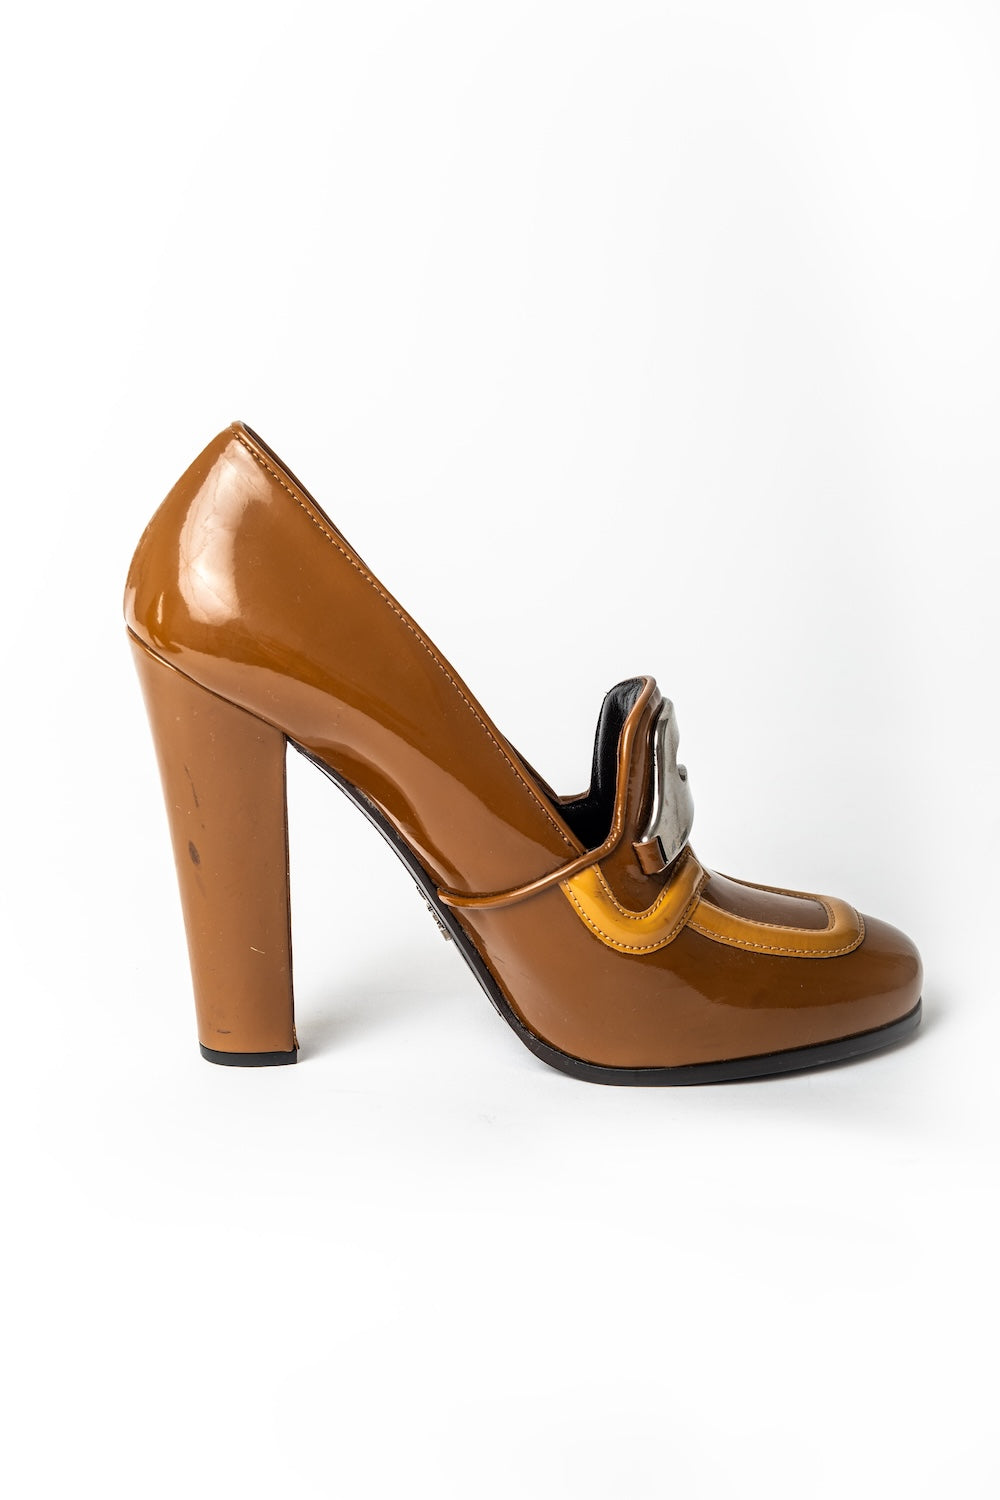 Prada <br> F/W 2010 runway patent leather platform loafers